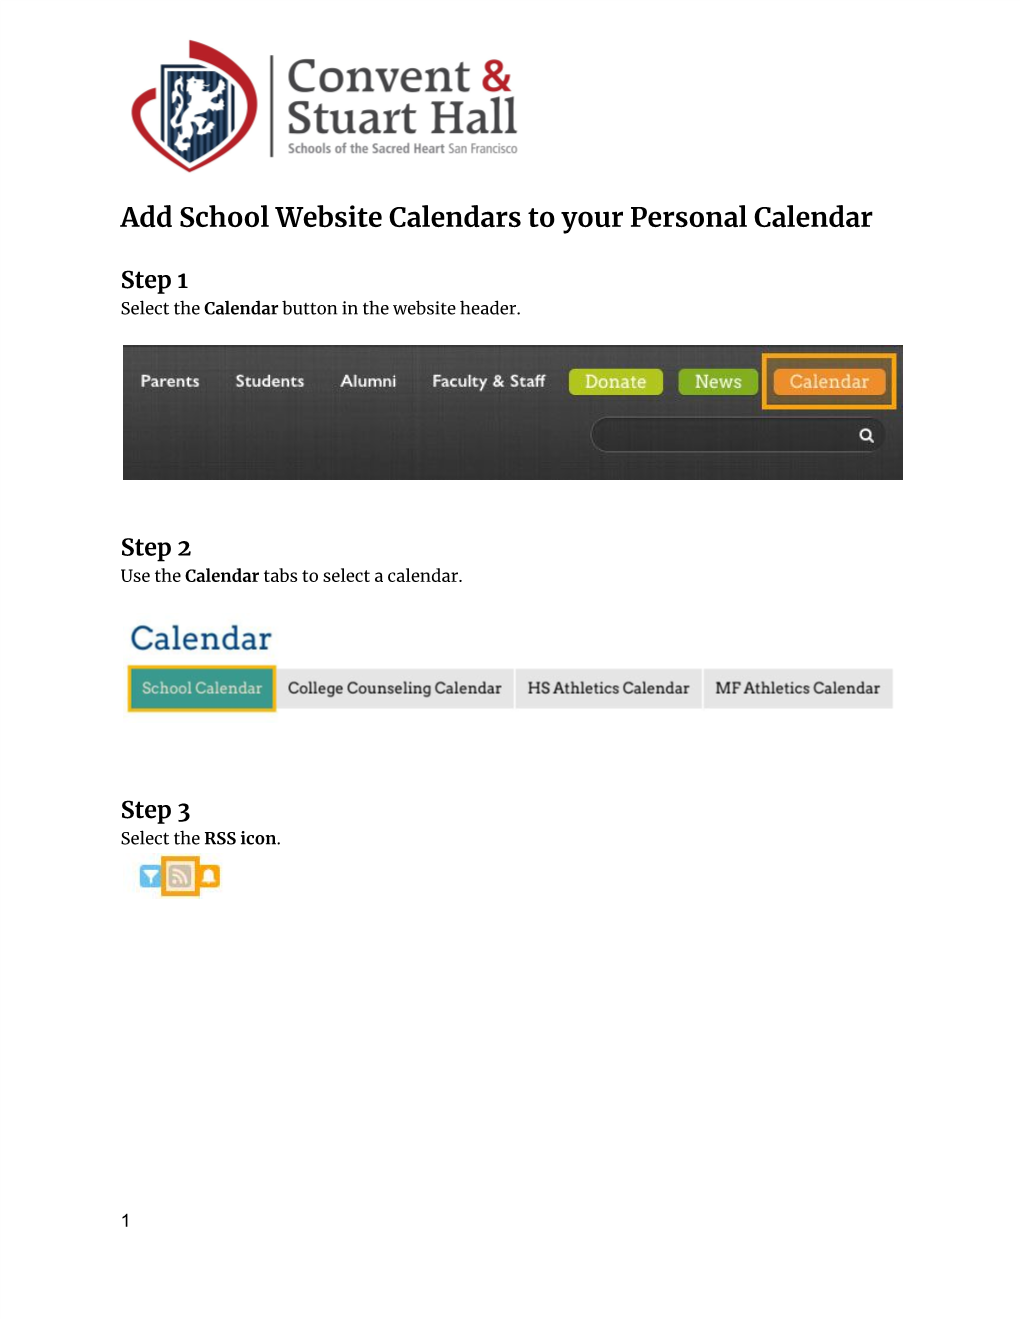 Add School Website Calendars to Your Personal Calendar